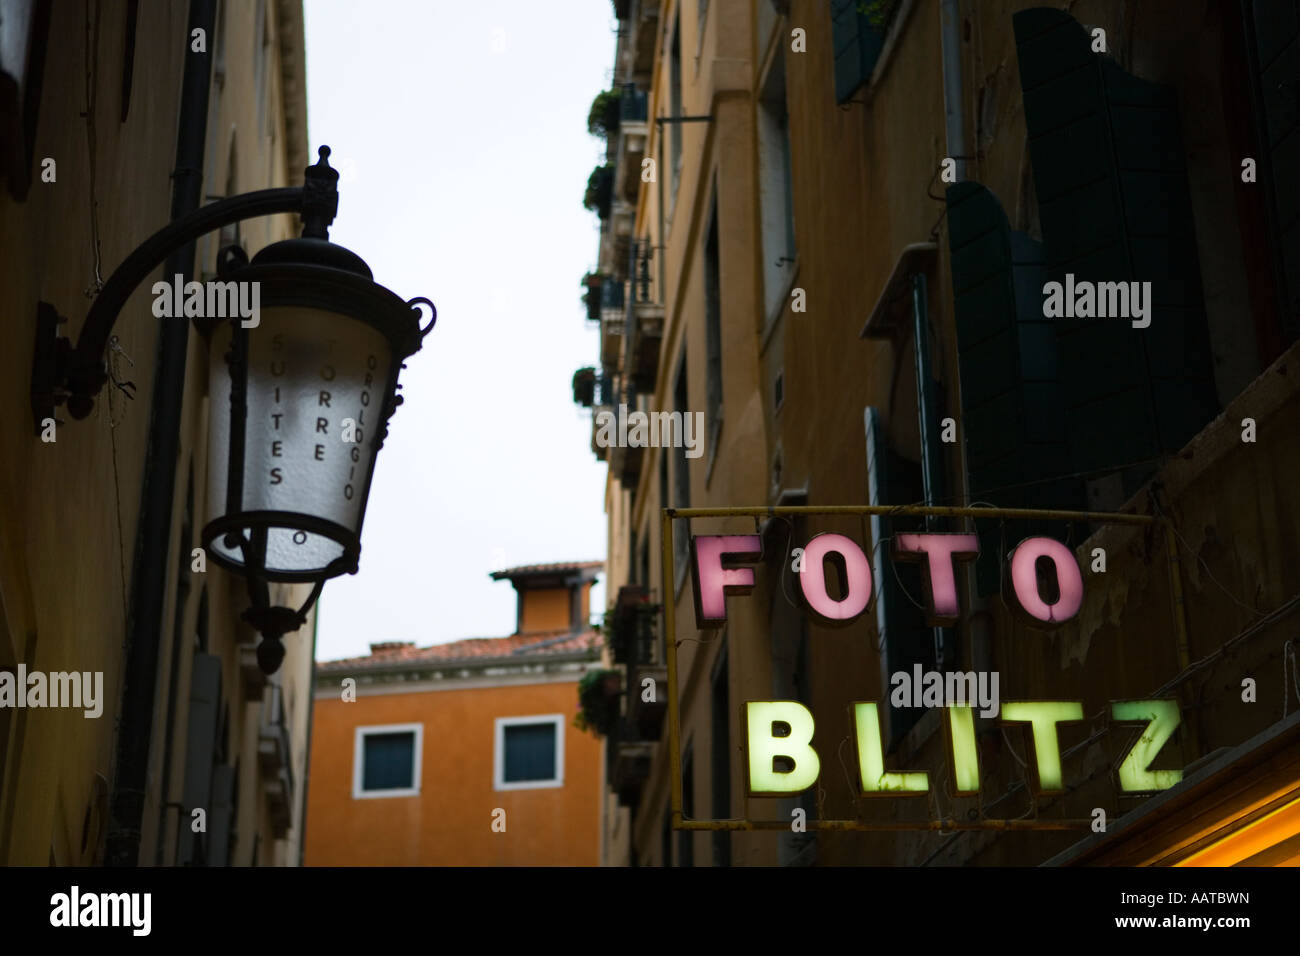 Mangle paralysis Execute Venice Italy Foto Blitz sign outside camera shop in San Marco Stock Photo -  Alamy